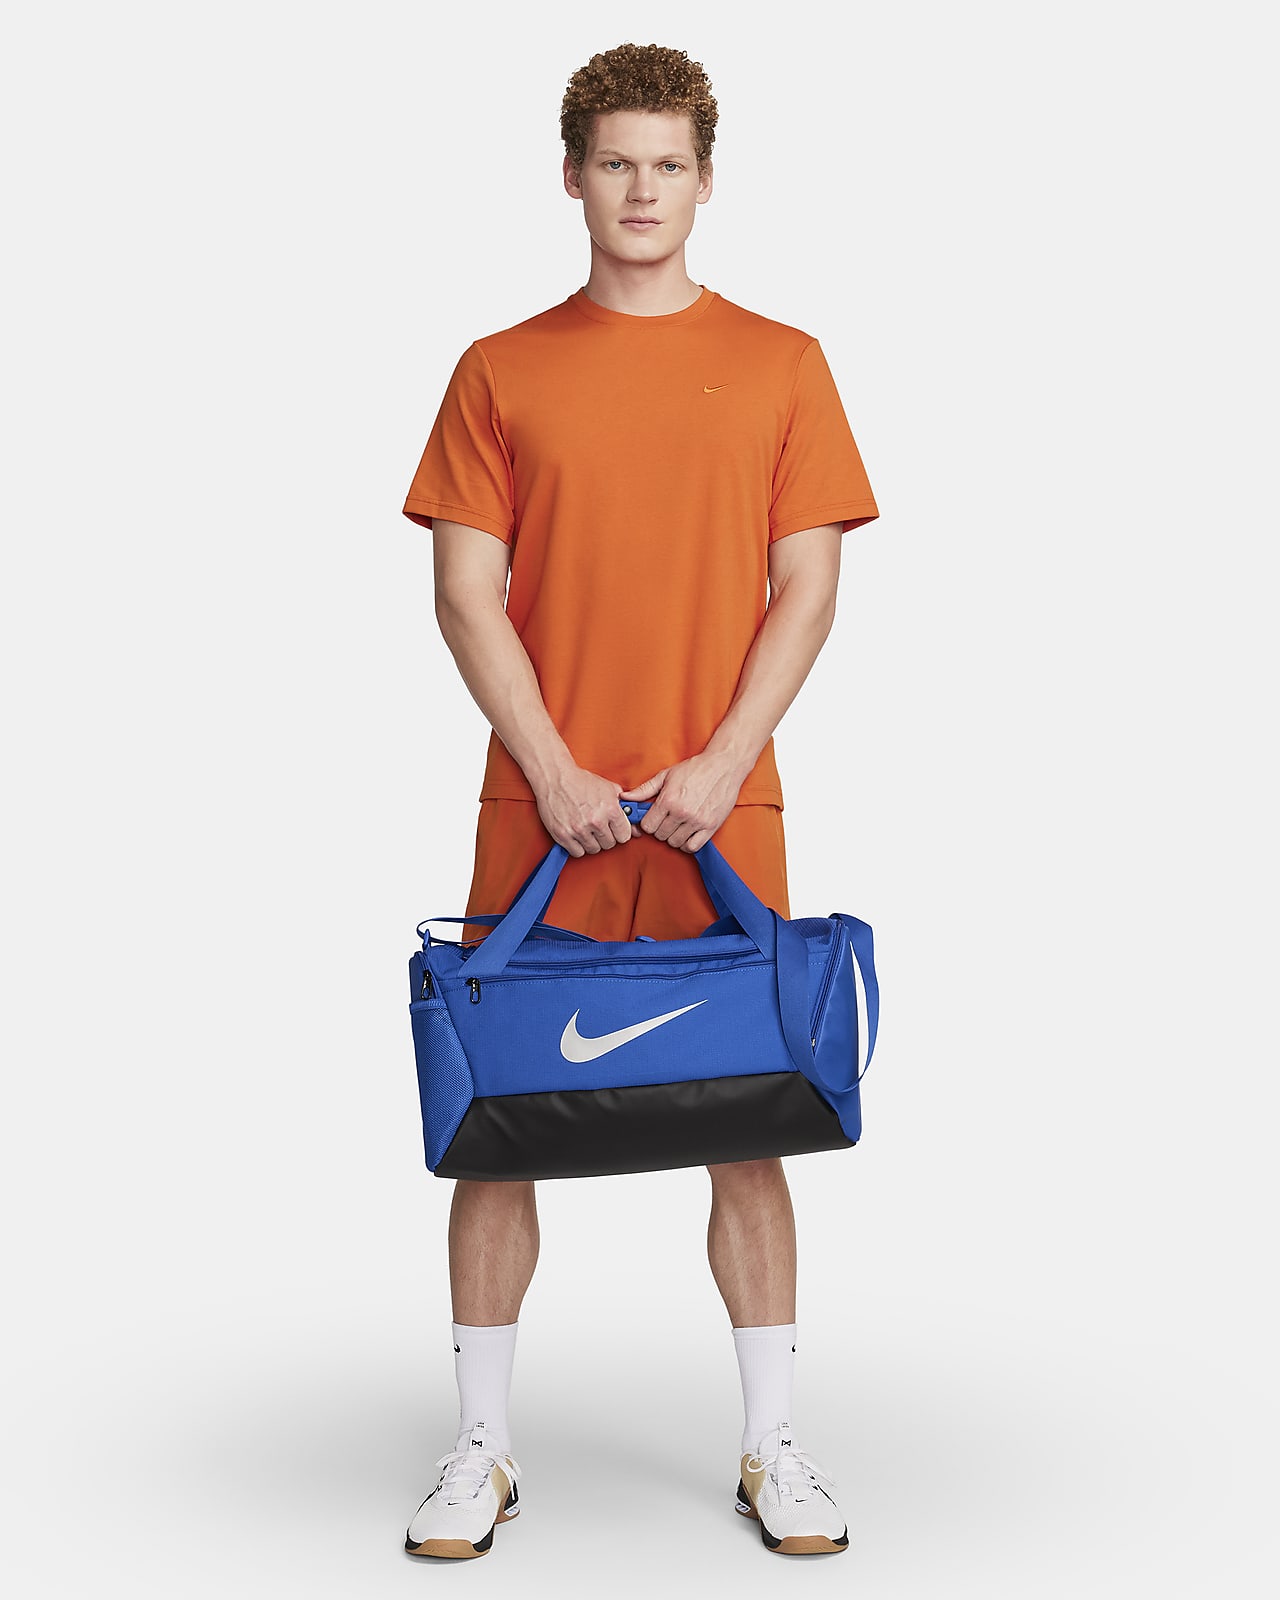 Nike Brasilia Training Duffel Bag (Small, 41L). Nike JP